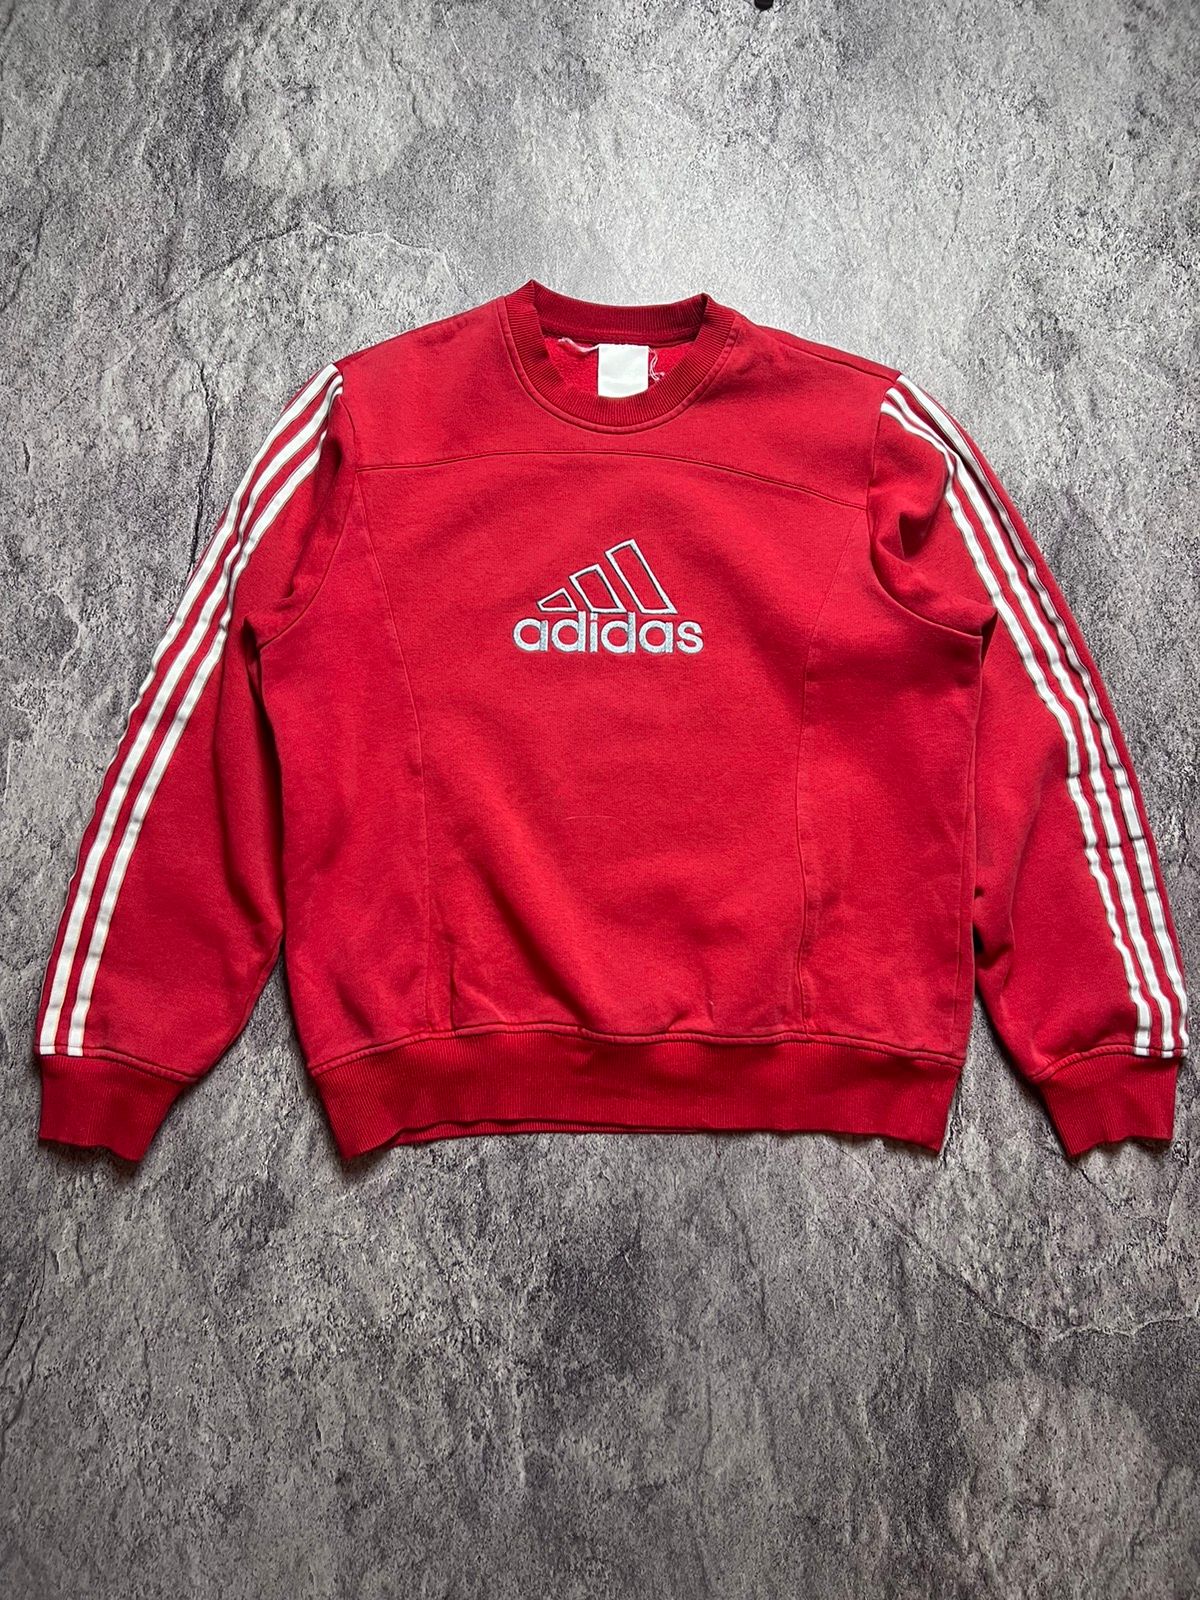 Pre-owned Adidas X Vintage Y2k Vintage Adidas 3 Stripes Baggy Soccer Style Sweatshirt In Light Red